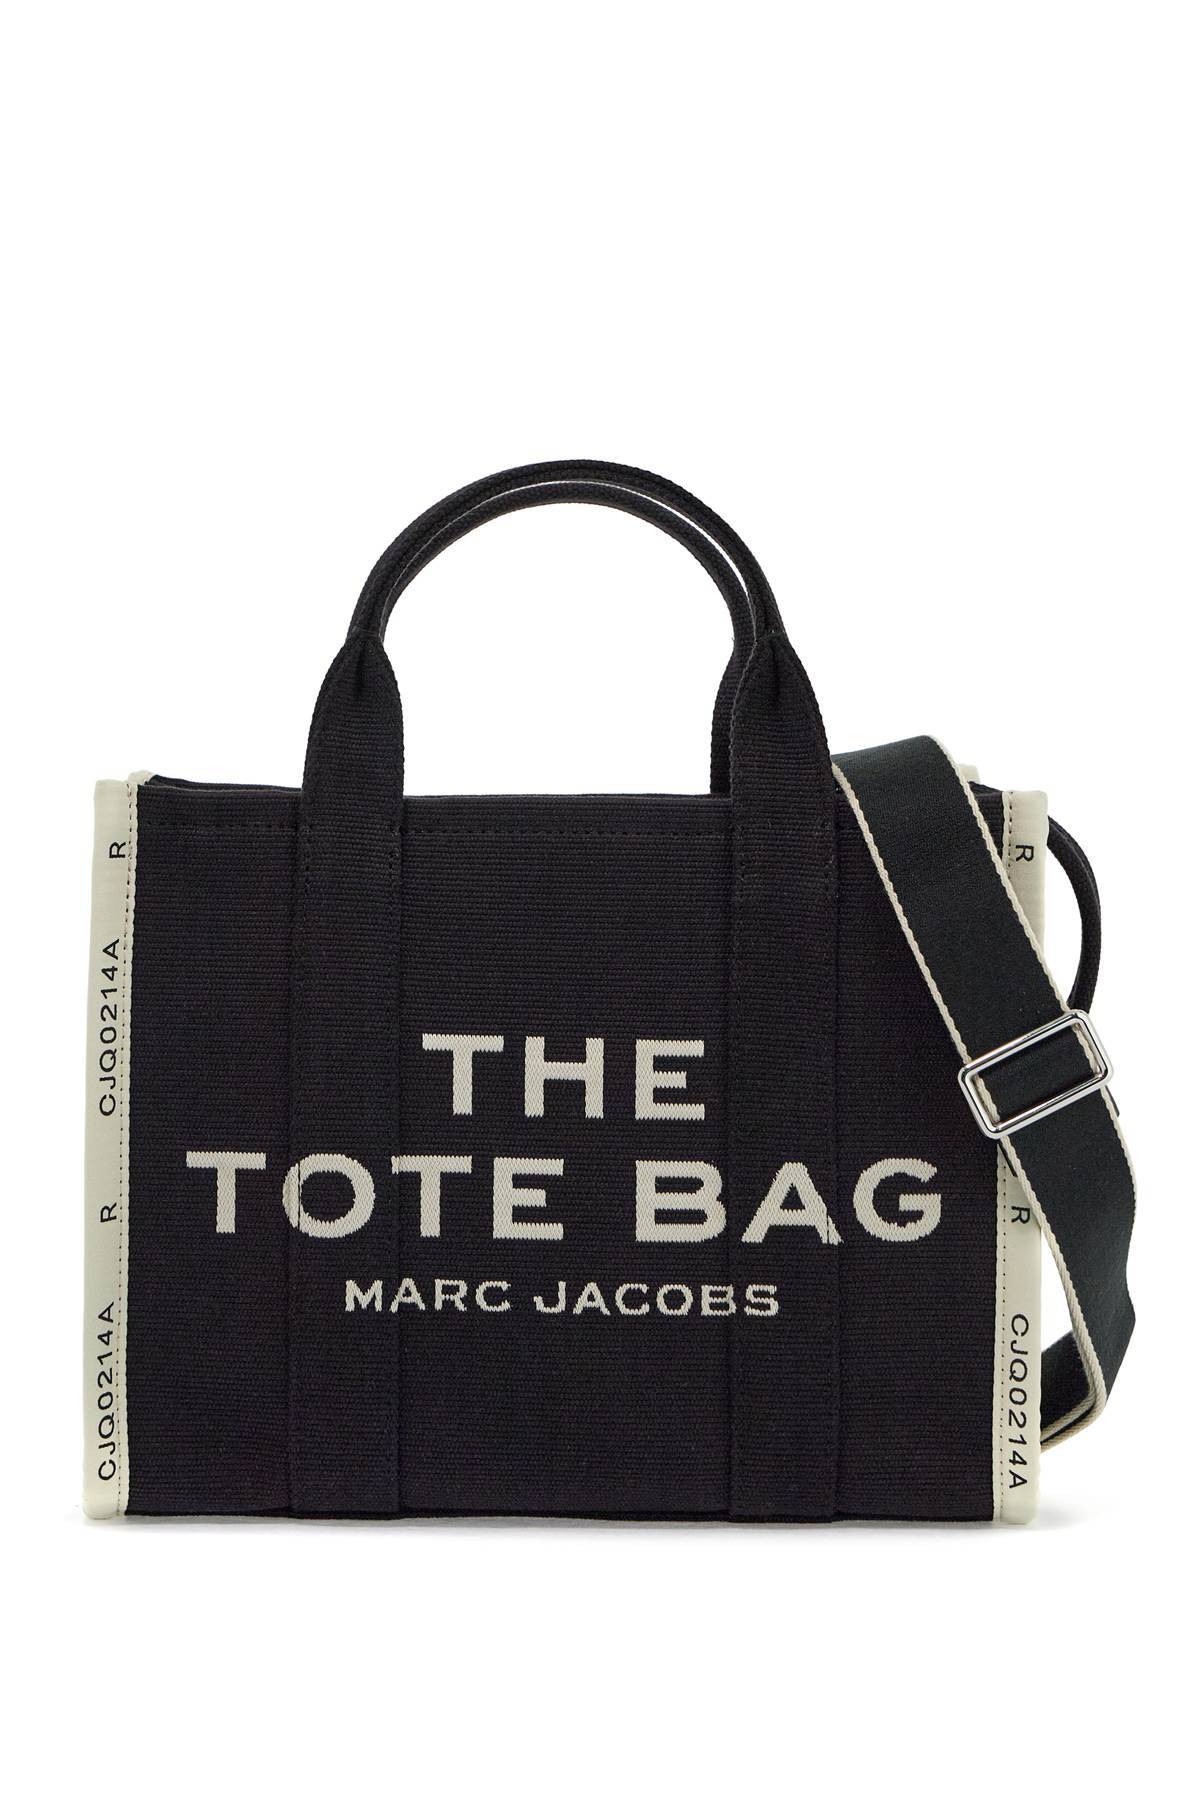 Marc Jacobs MARC JACOBS the jacquard medium tote bag